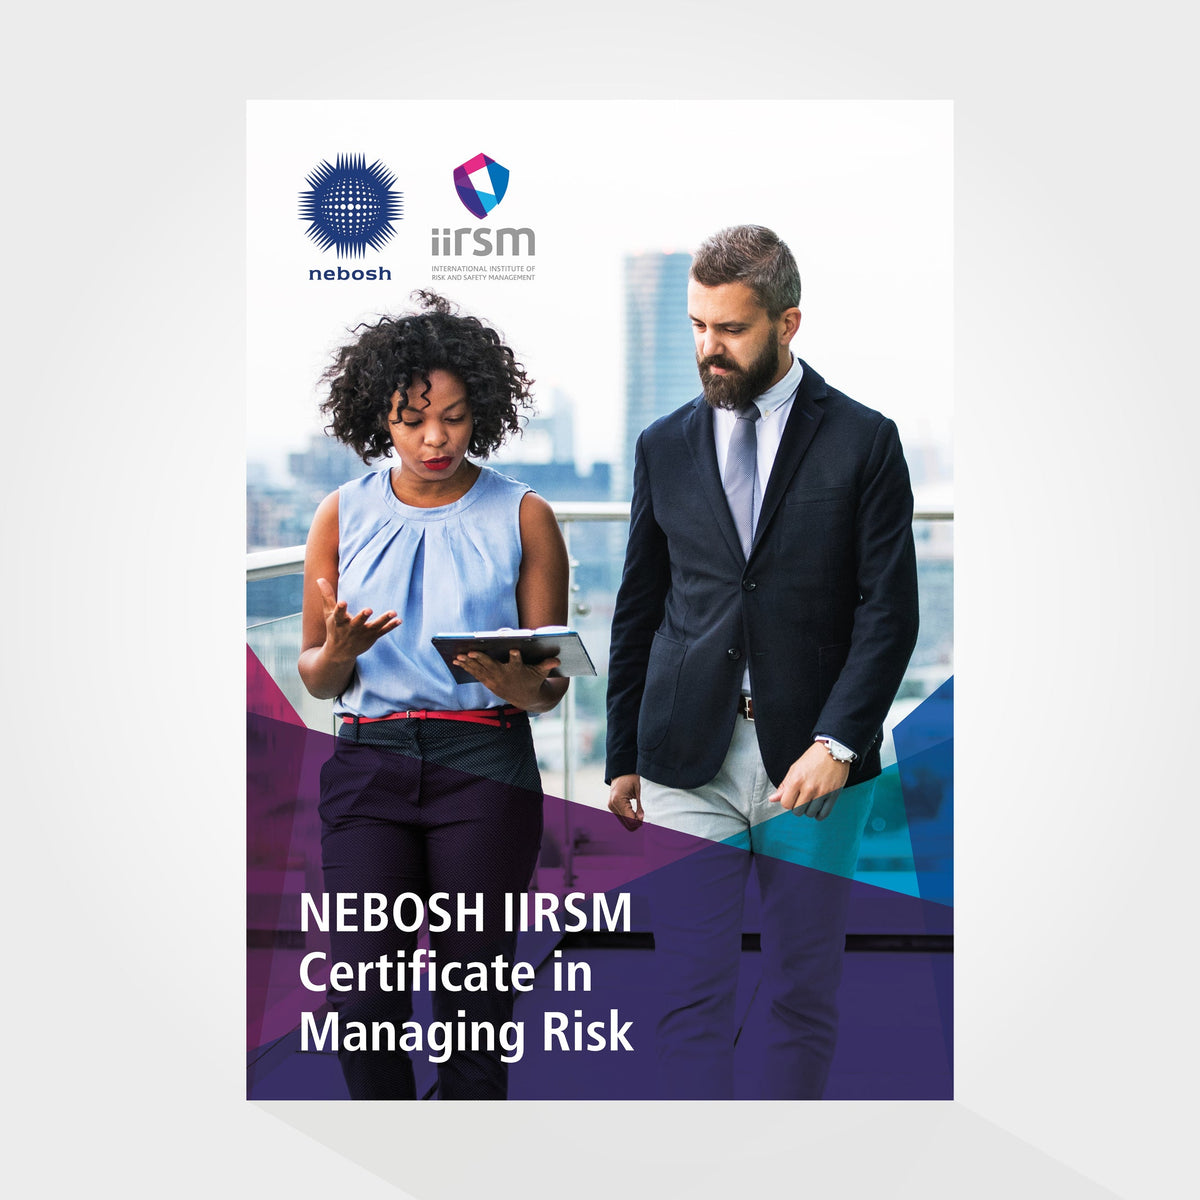 NEBOSH IIRSM Certificate in Managing Risk Book Cover